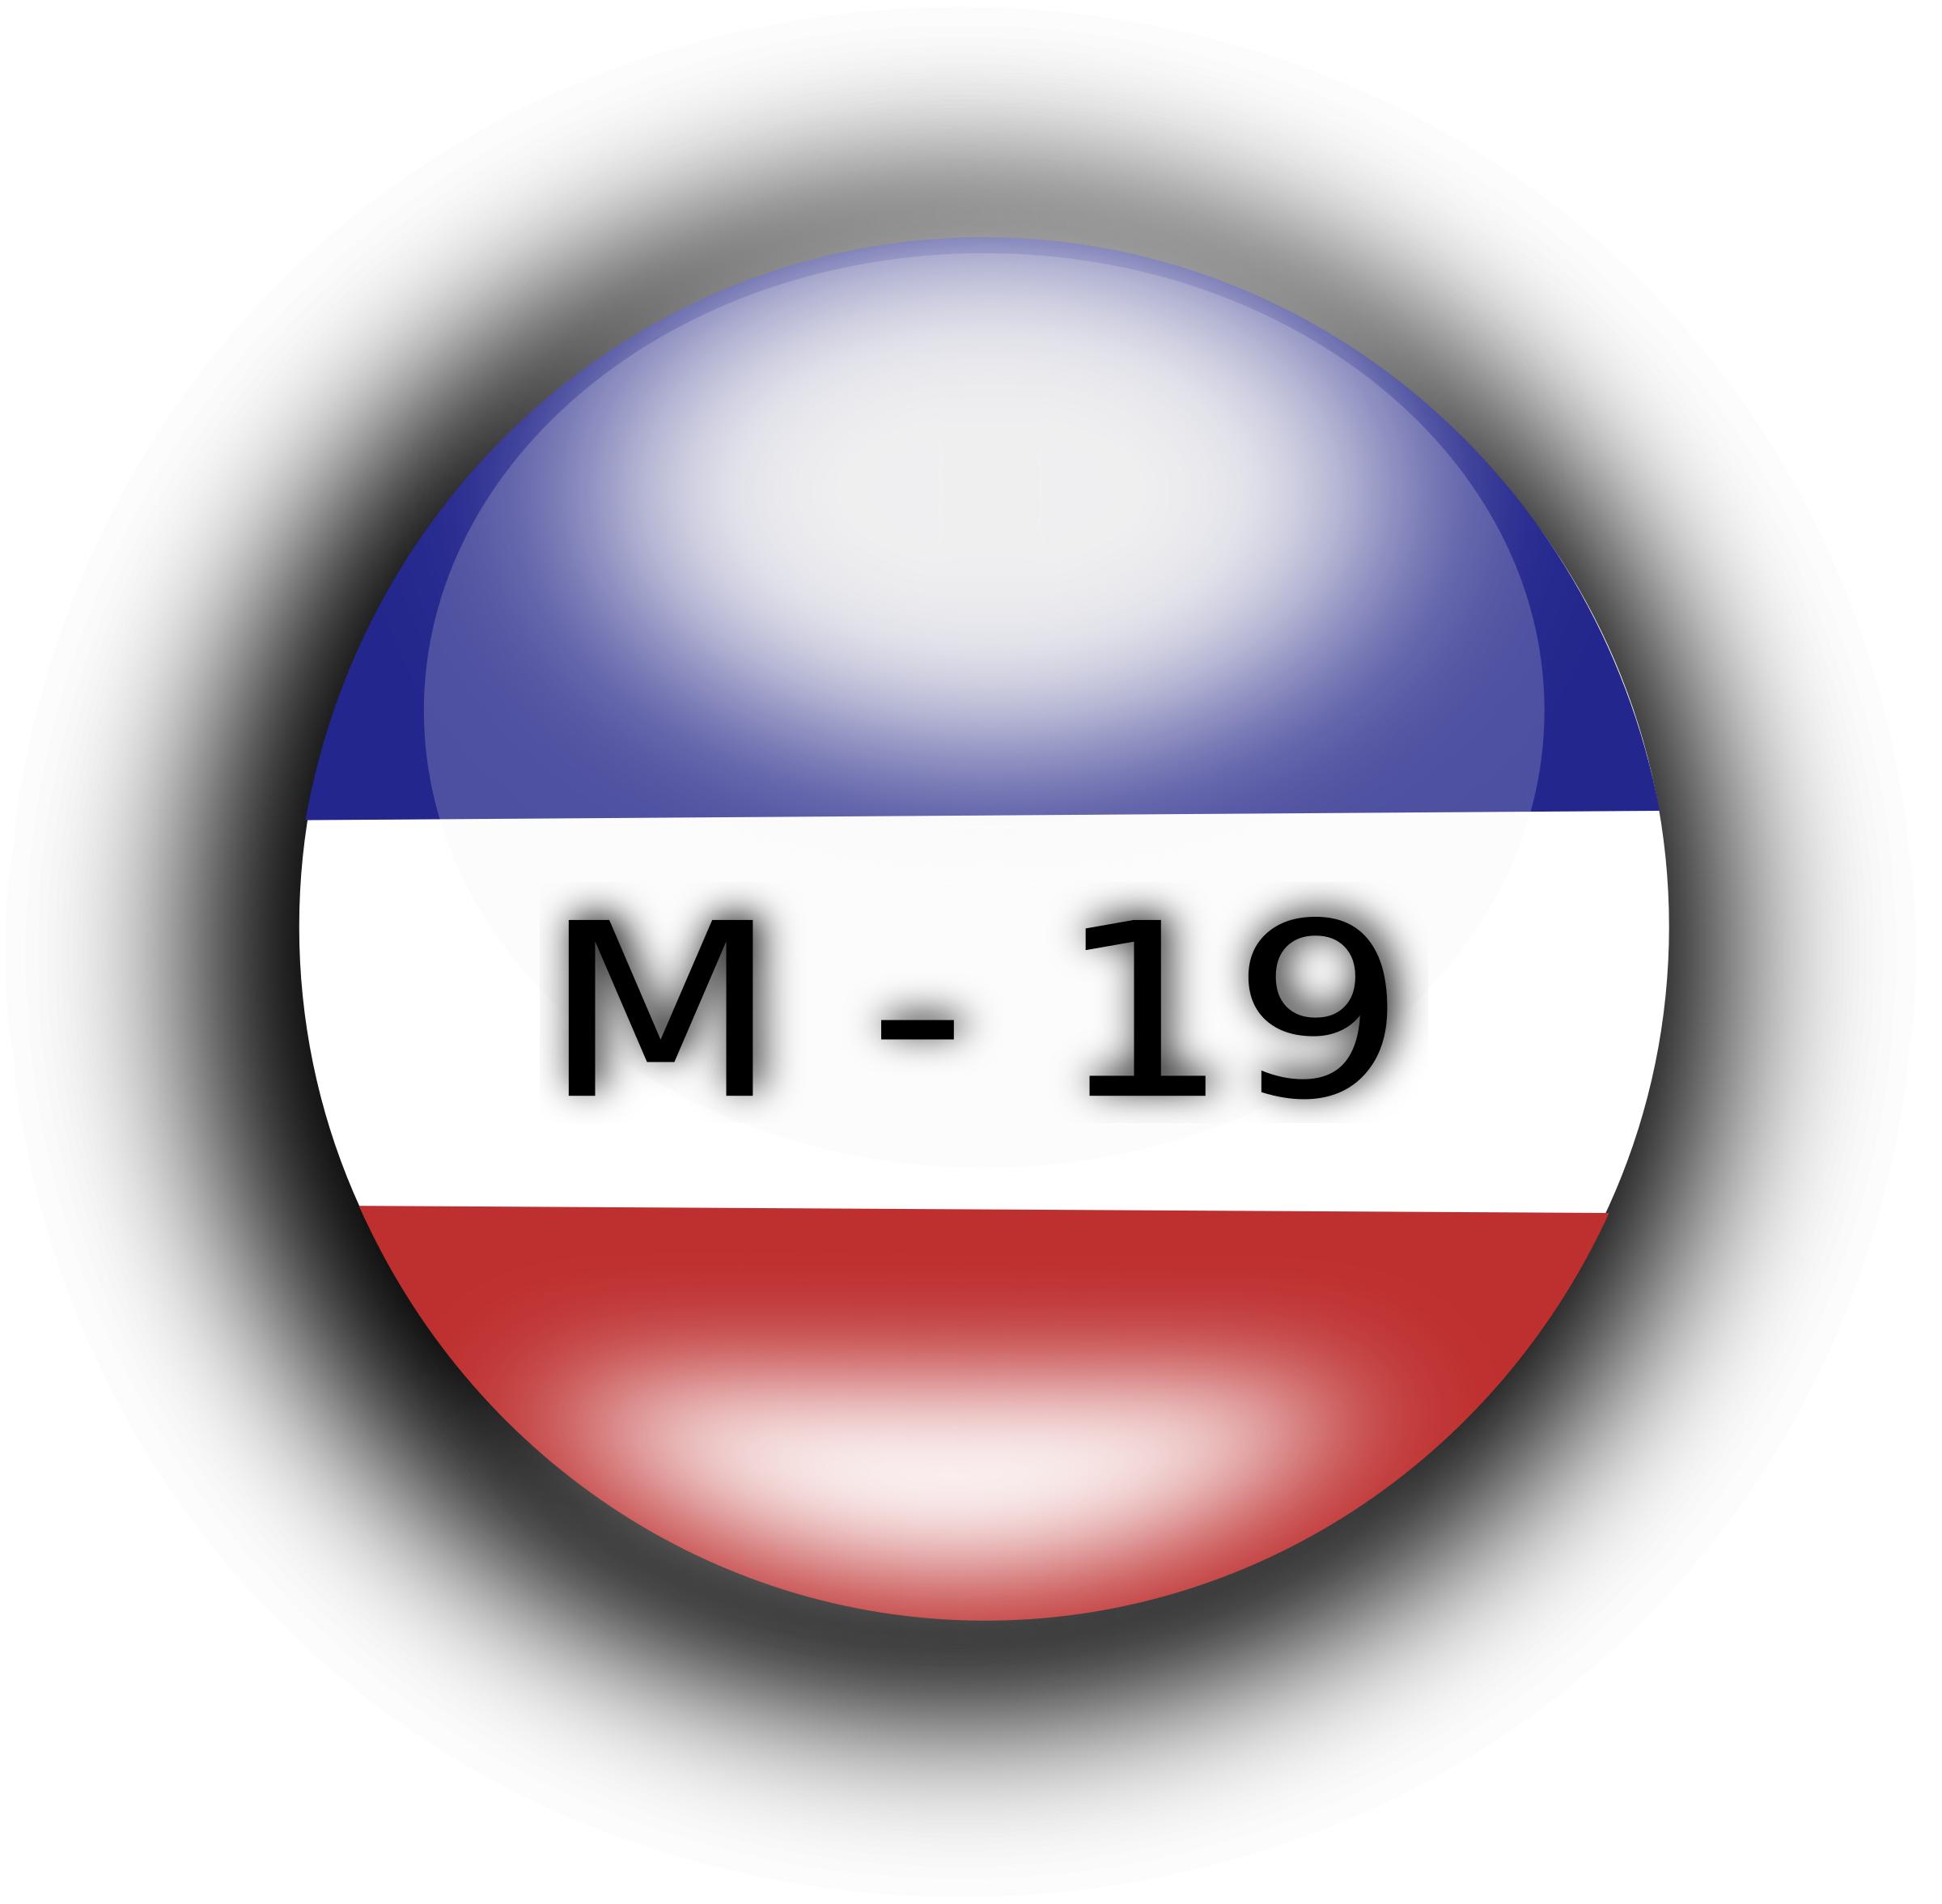 M - 19 icons